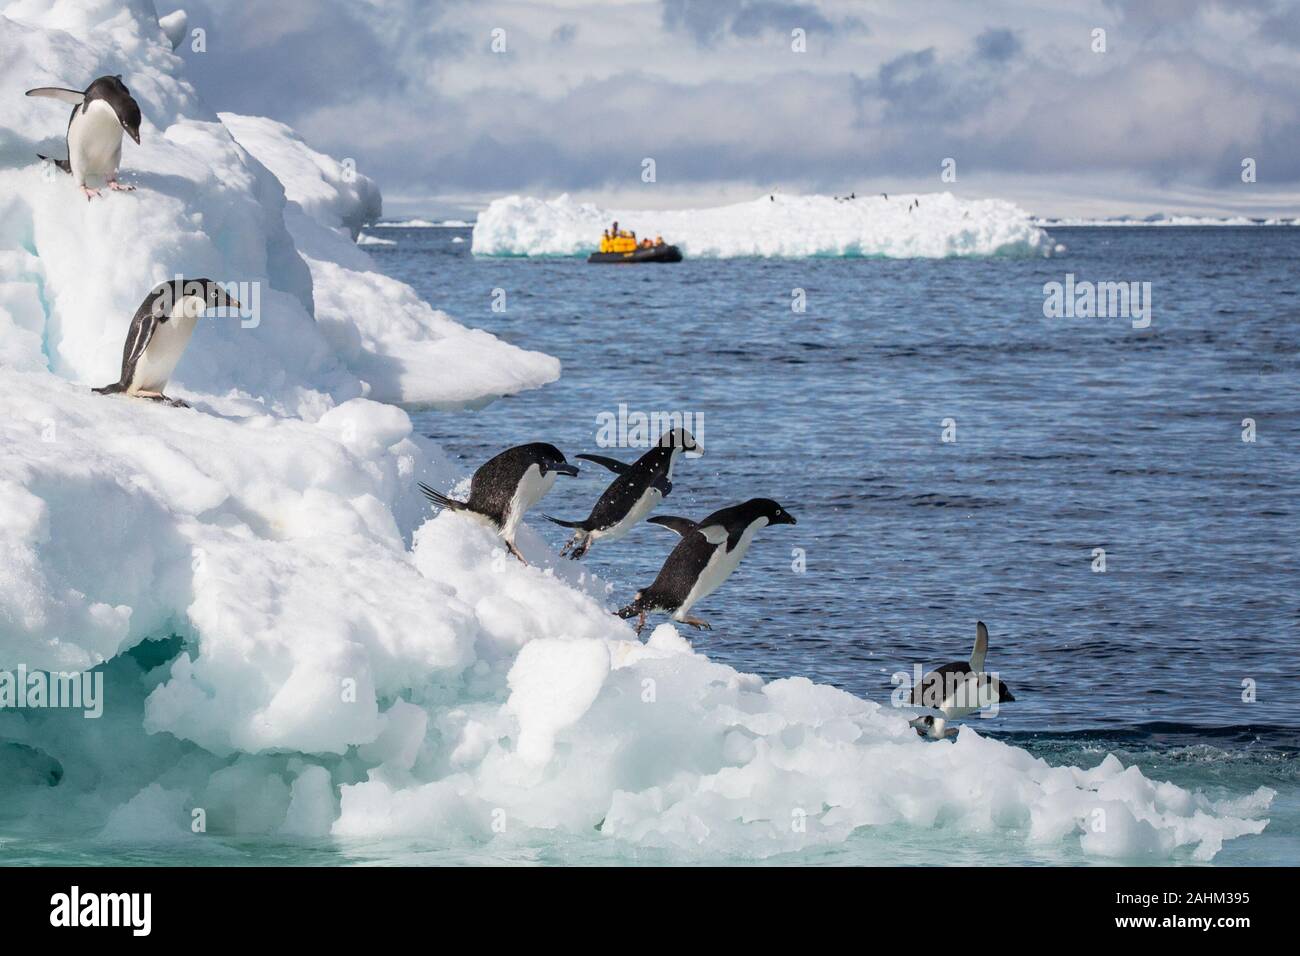 Adele Penguin in Antarctica Stock Photo